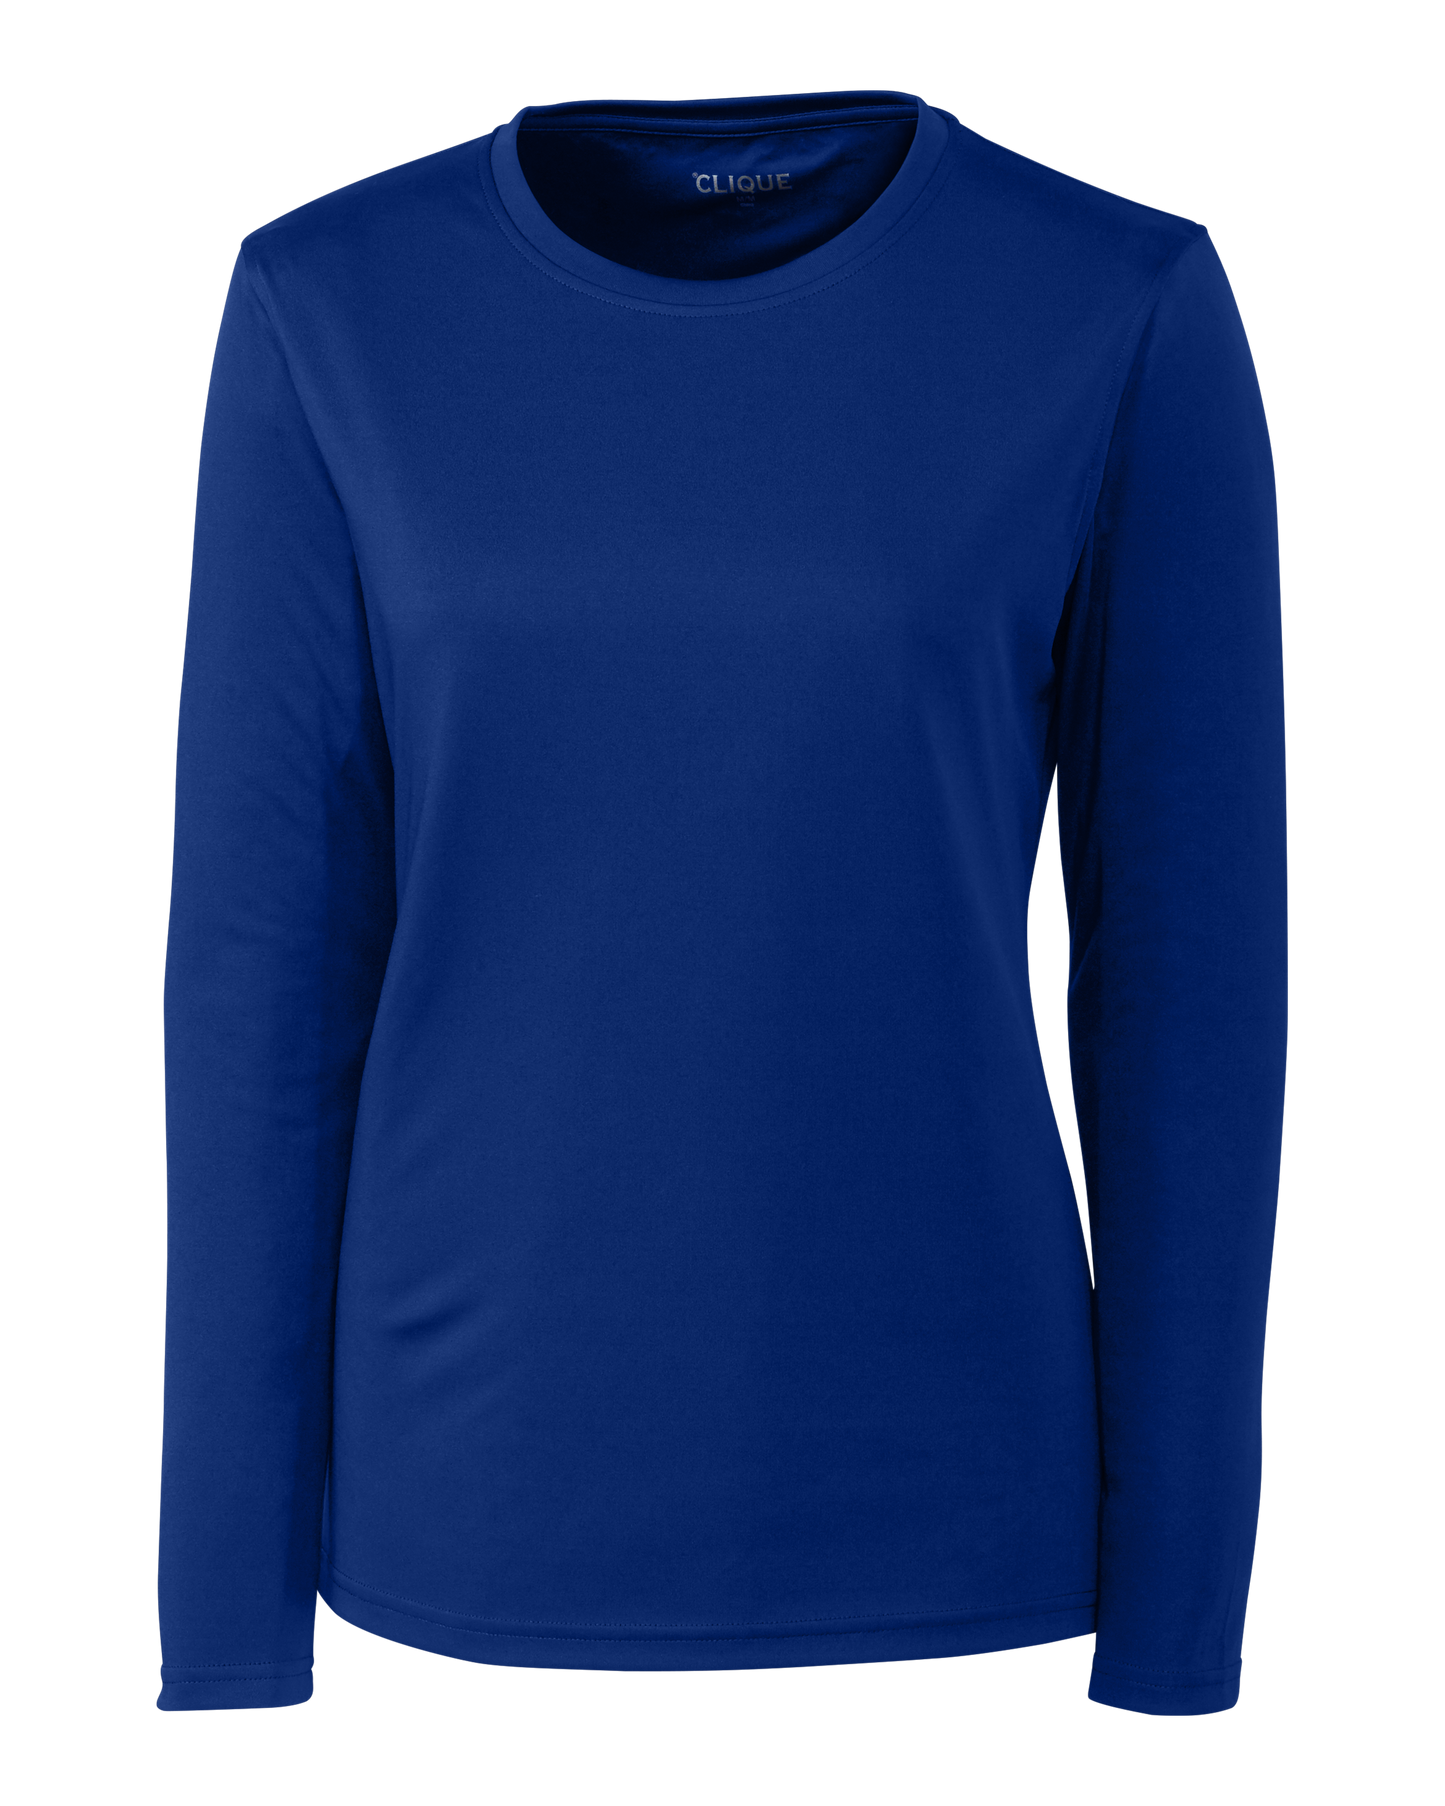 Performance Long Sleeve Womens Tee Shirt - LQK00067